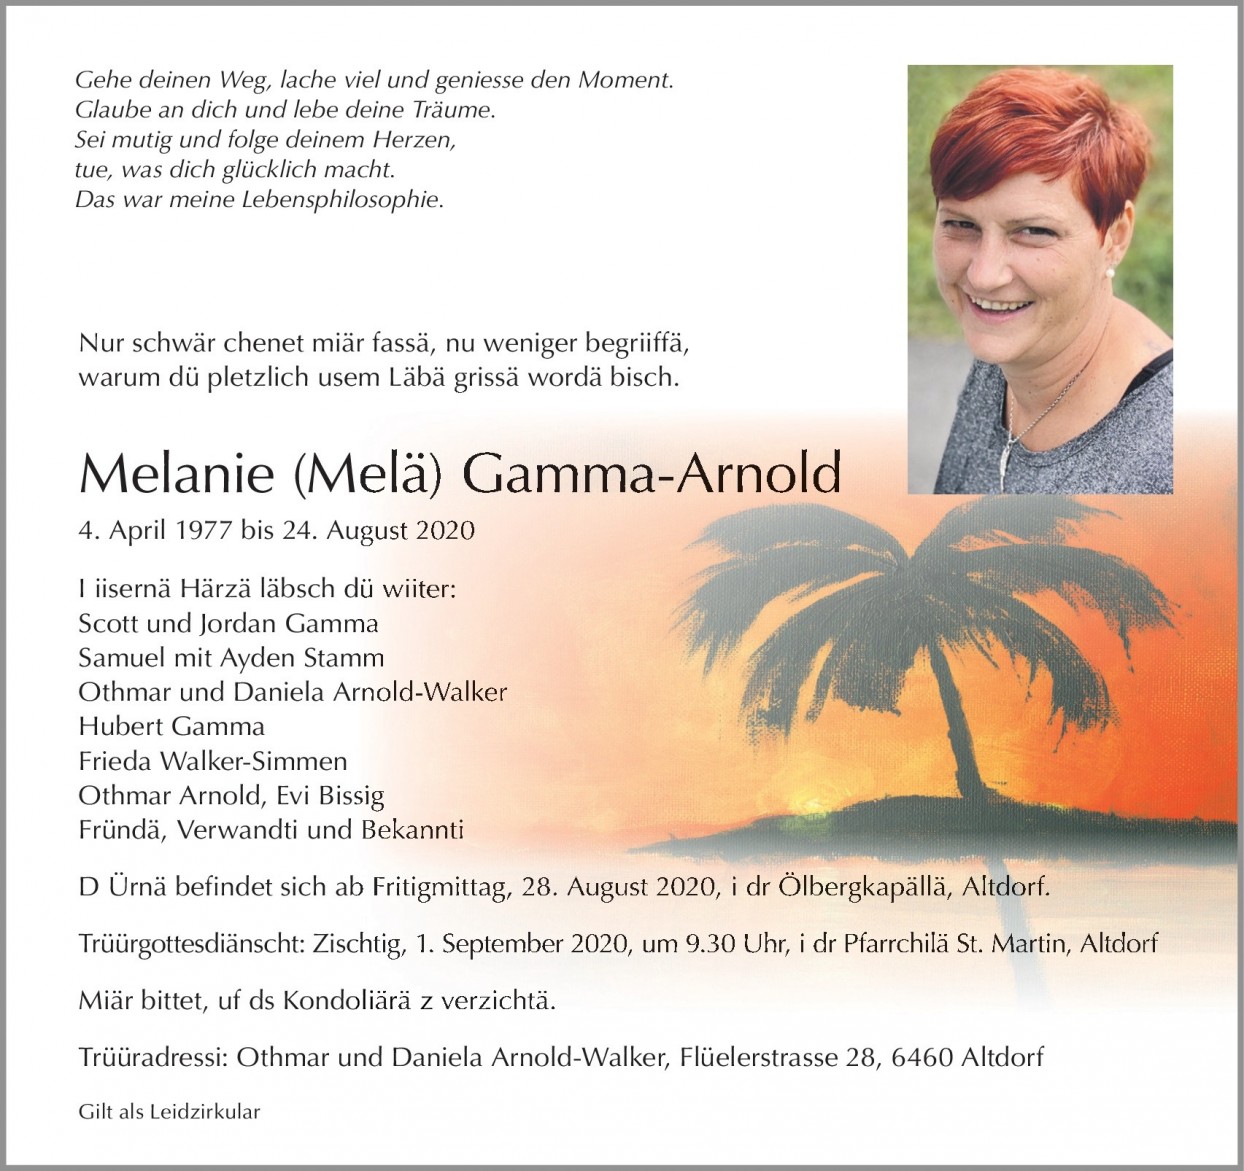 Melanie Gamma-Arnold